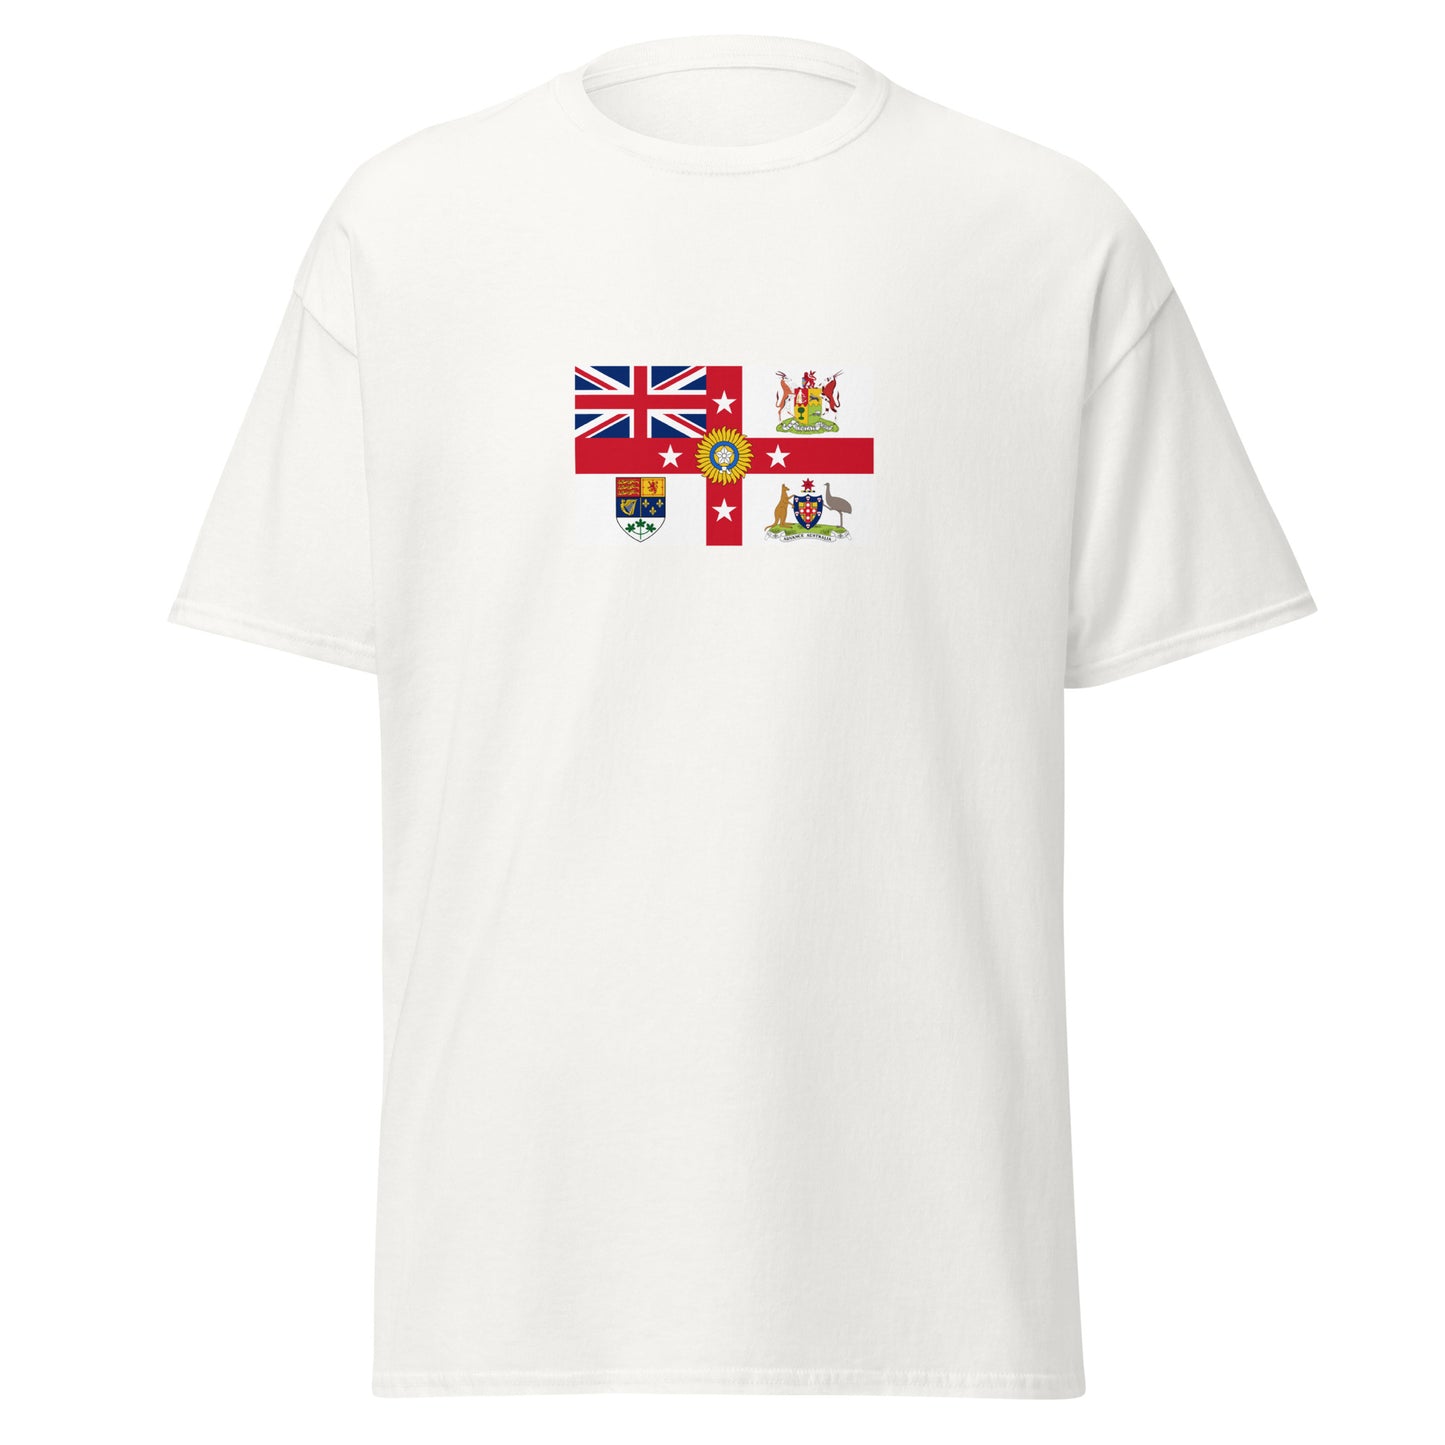 British Empire (1910-1945) | Australia Flag Interactive History T-Shirt